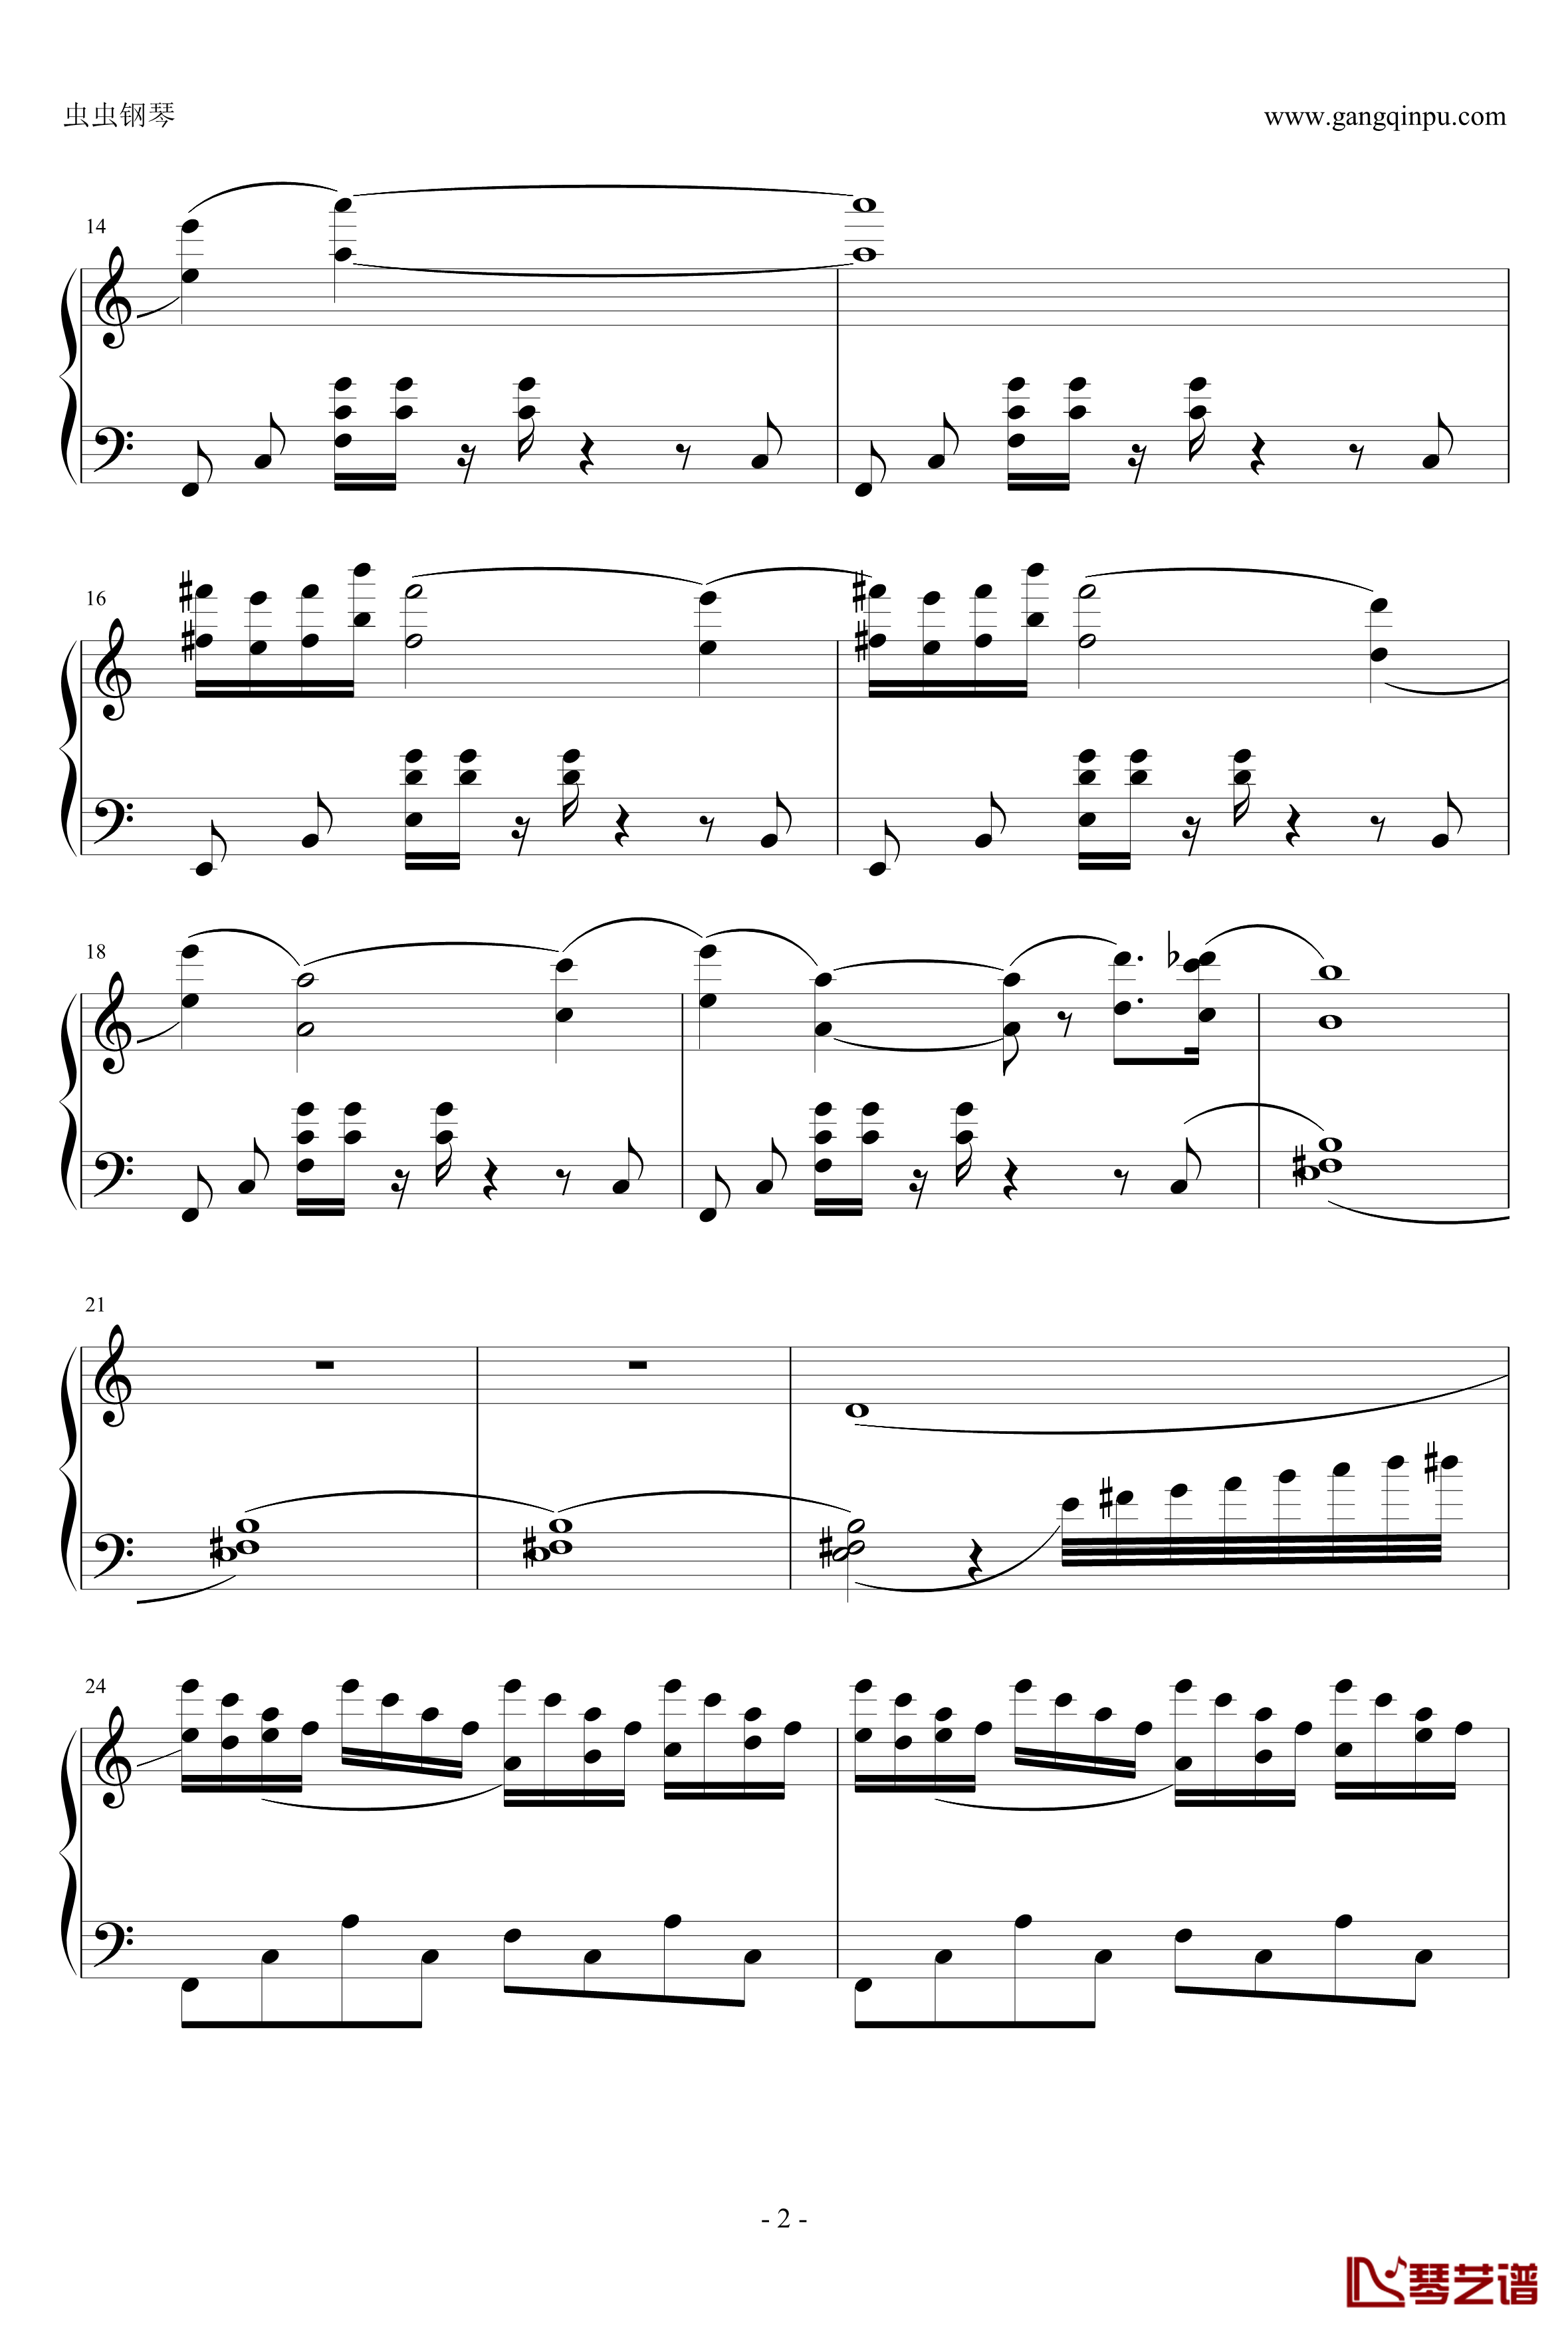 YS Feenas theme钢琴谱-菲娜主题曲伊苏22